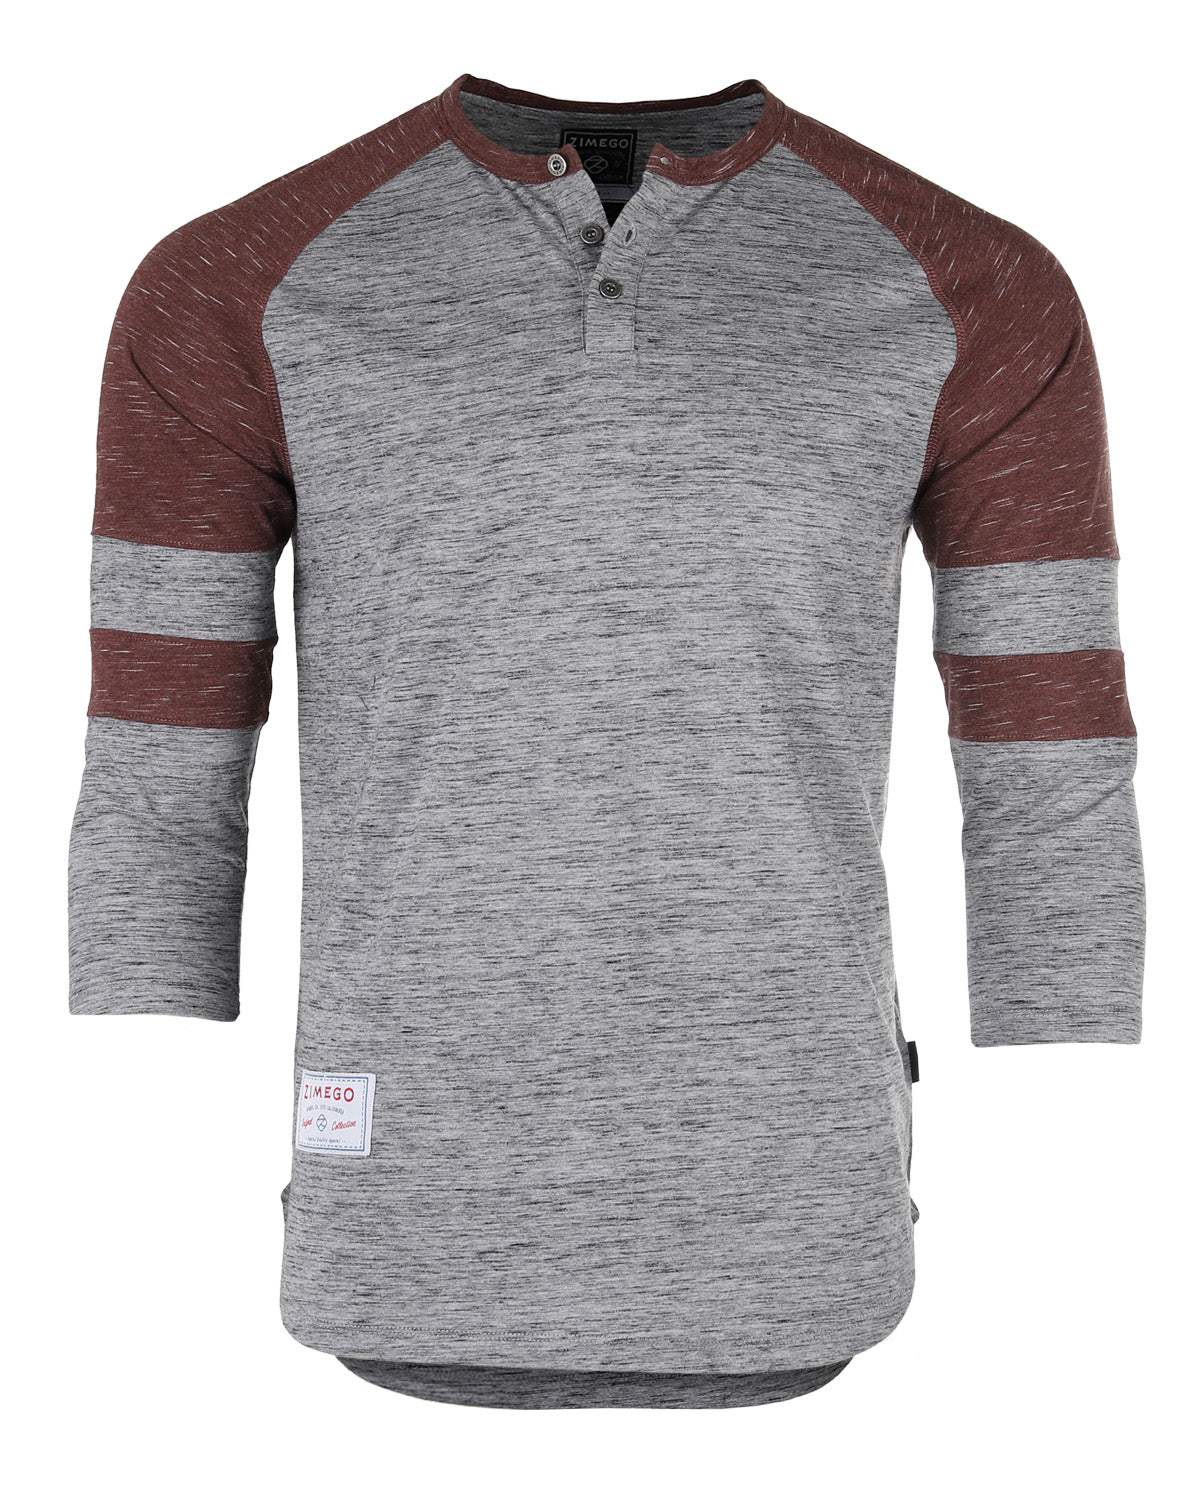 Men's 3/4 Sleeve Maroon Baseball Football College Raglan Henley Athletic T-shirt